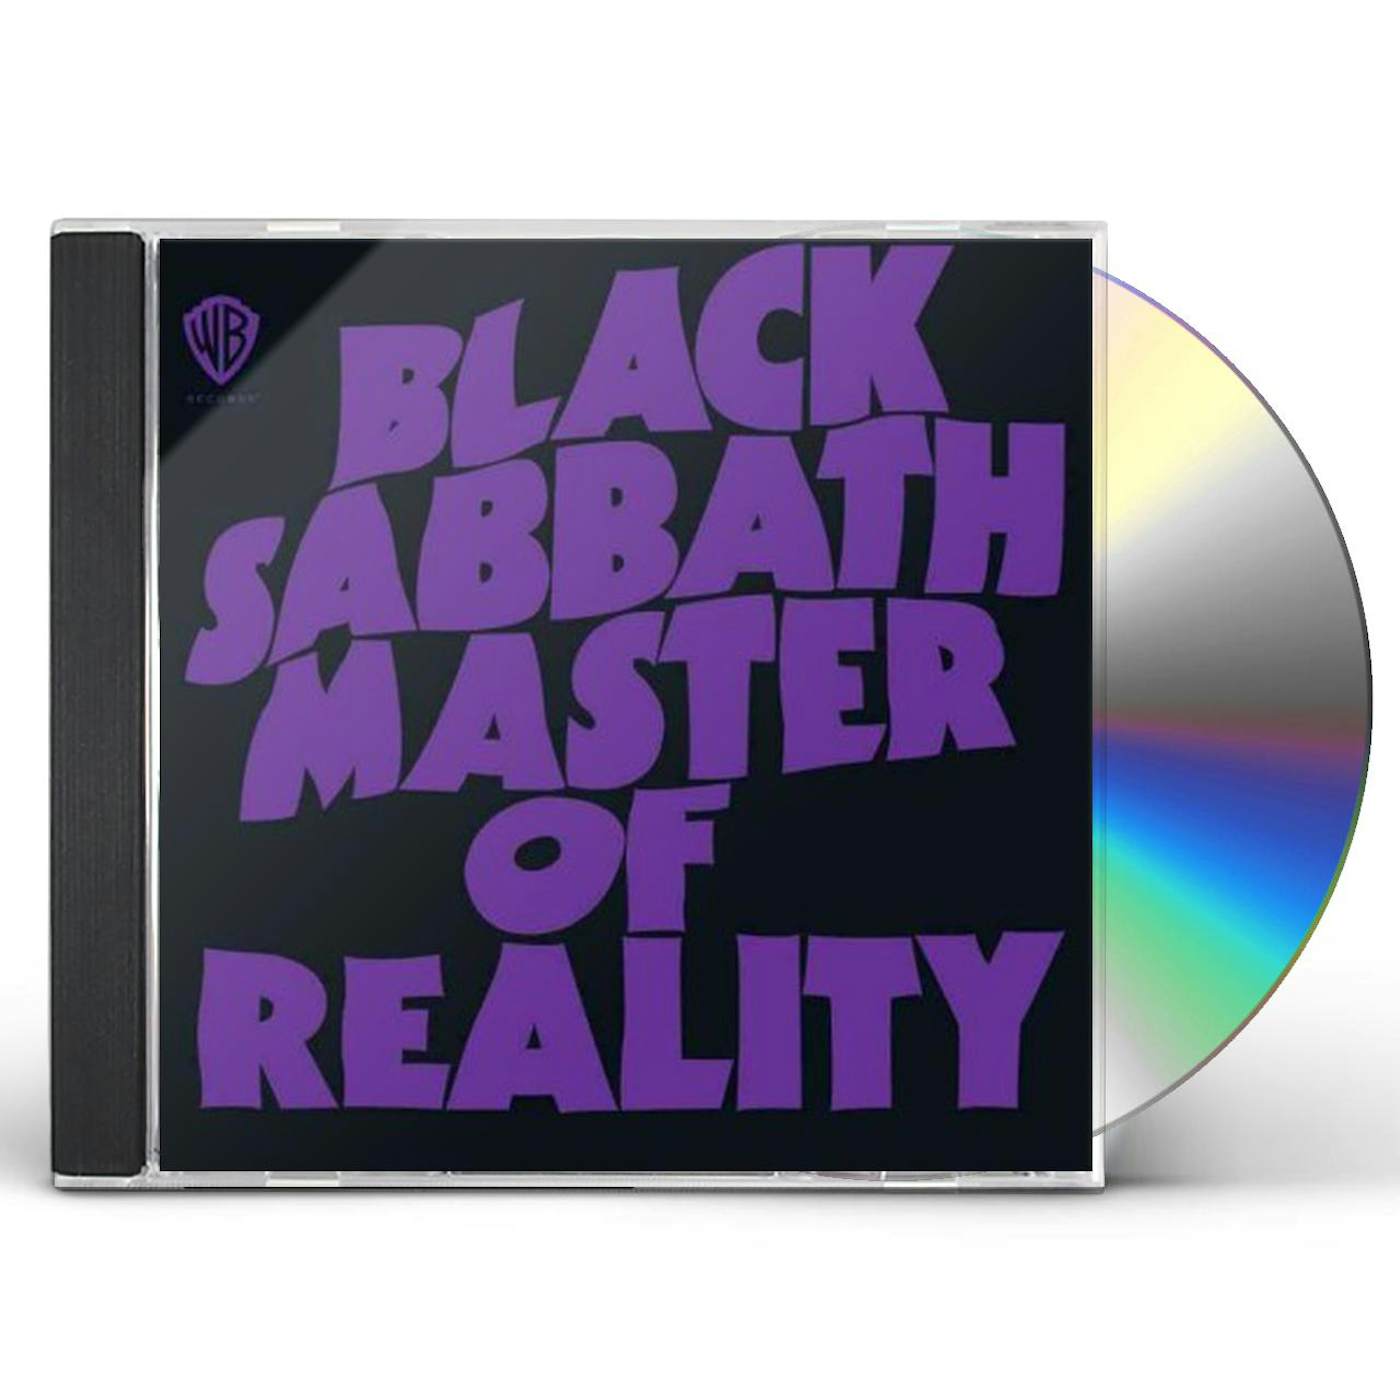 Black Sabbath MASTER OF REALITY CD